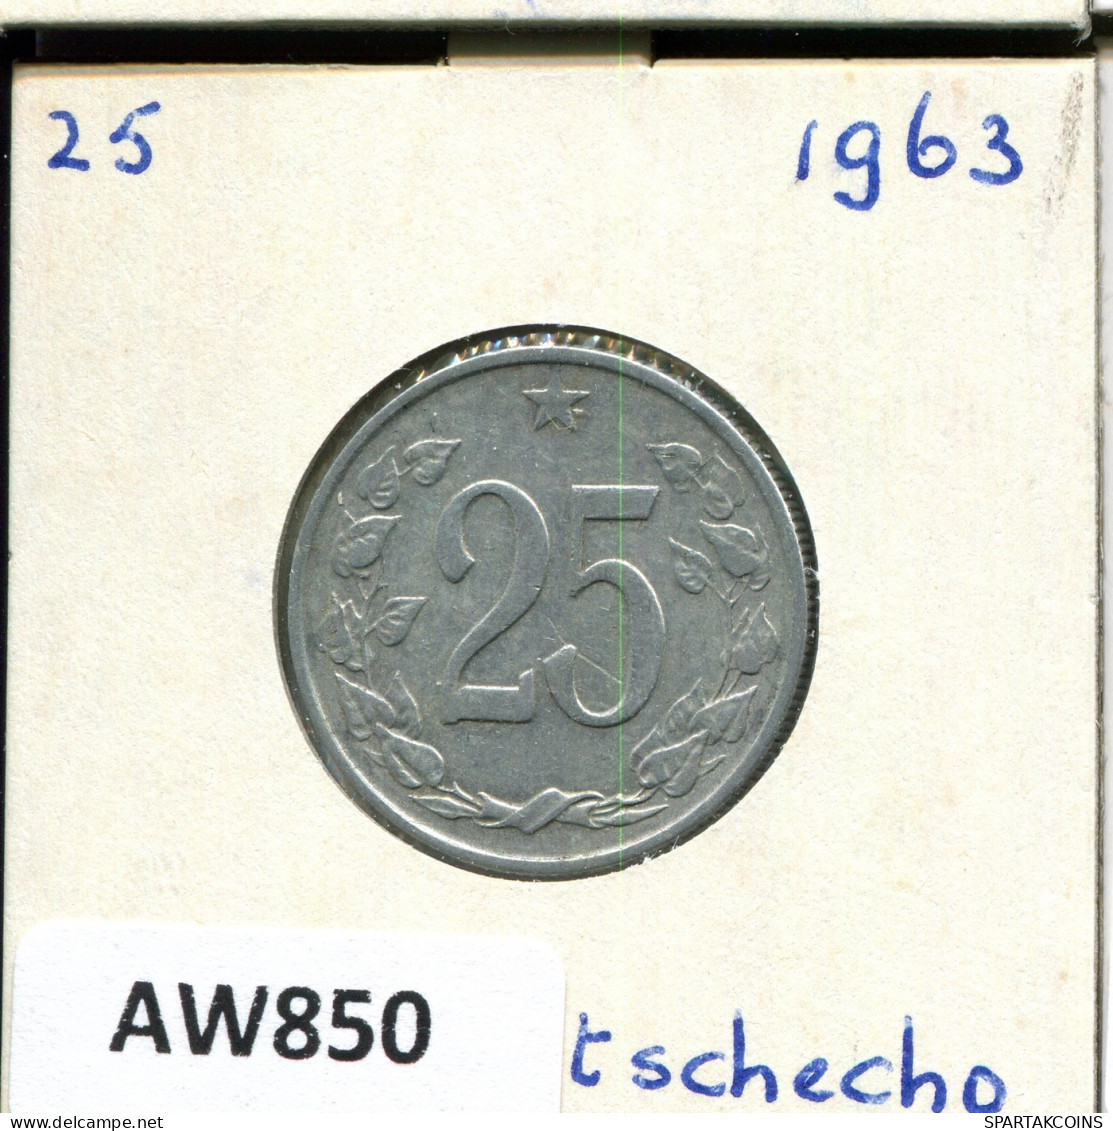 25 KORUN 1963 CZECHOSLOVAKIA Coin #AW850.U.A - Cecoslovacchia